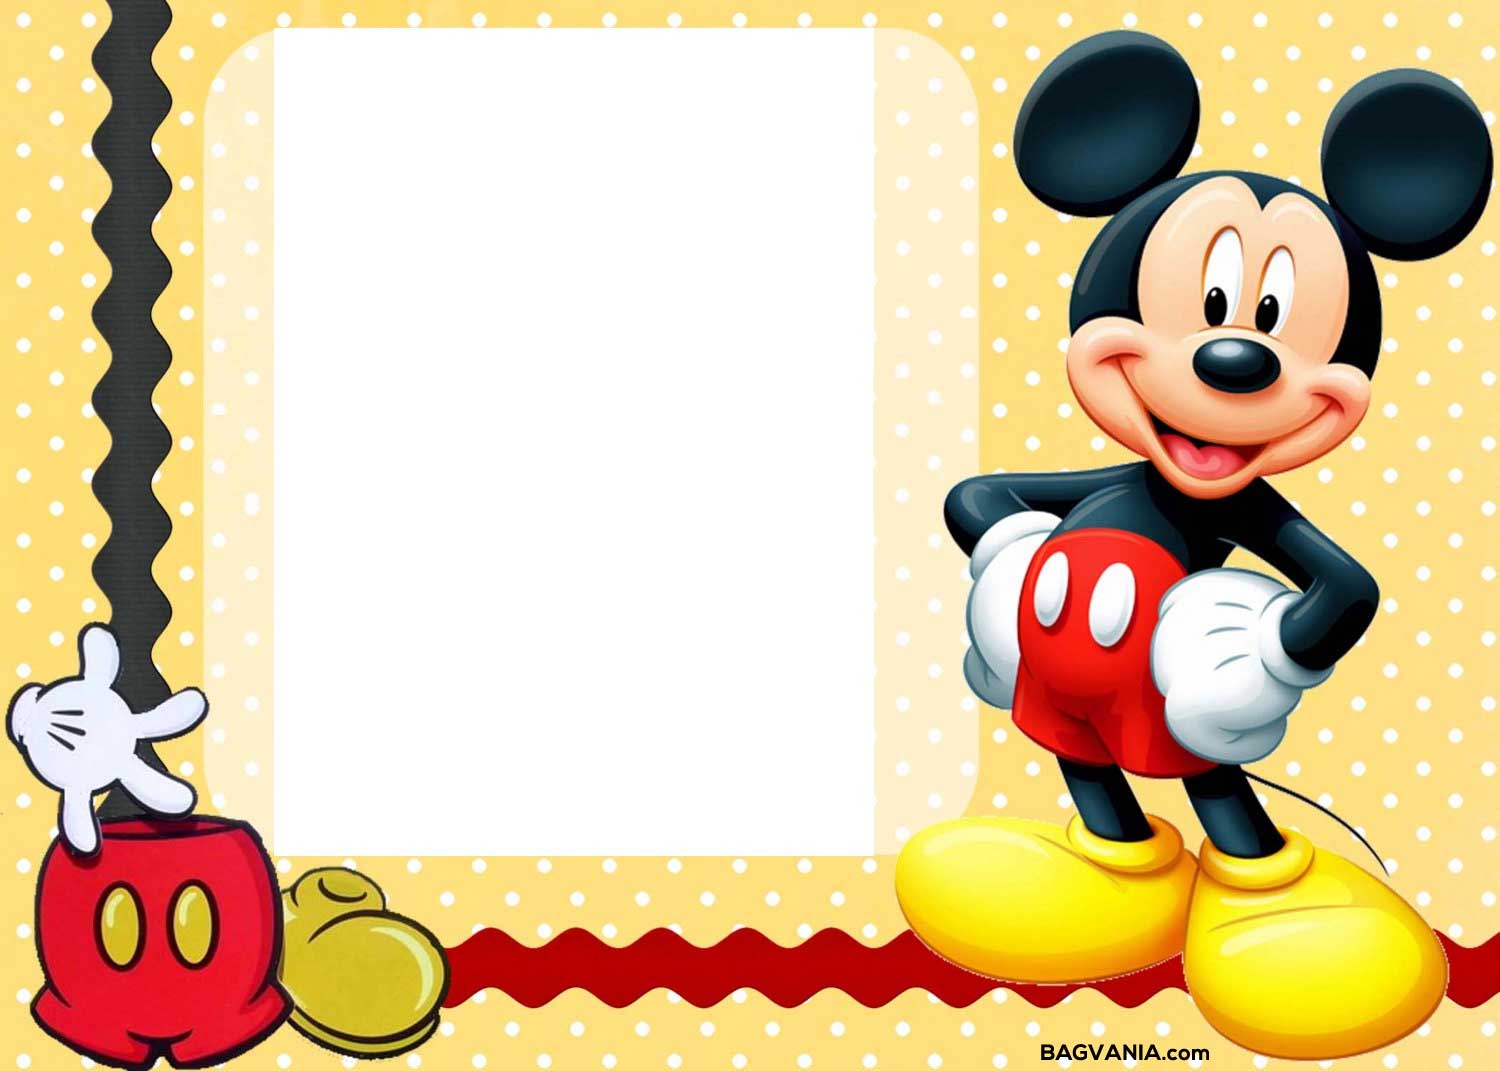 cordially-invited-mickey-mouse-birthday-invitation